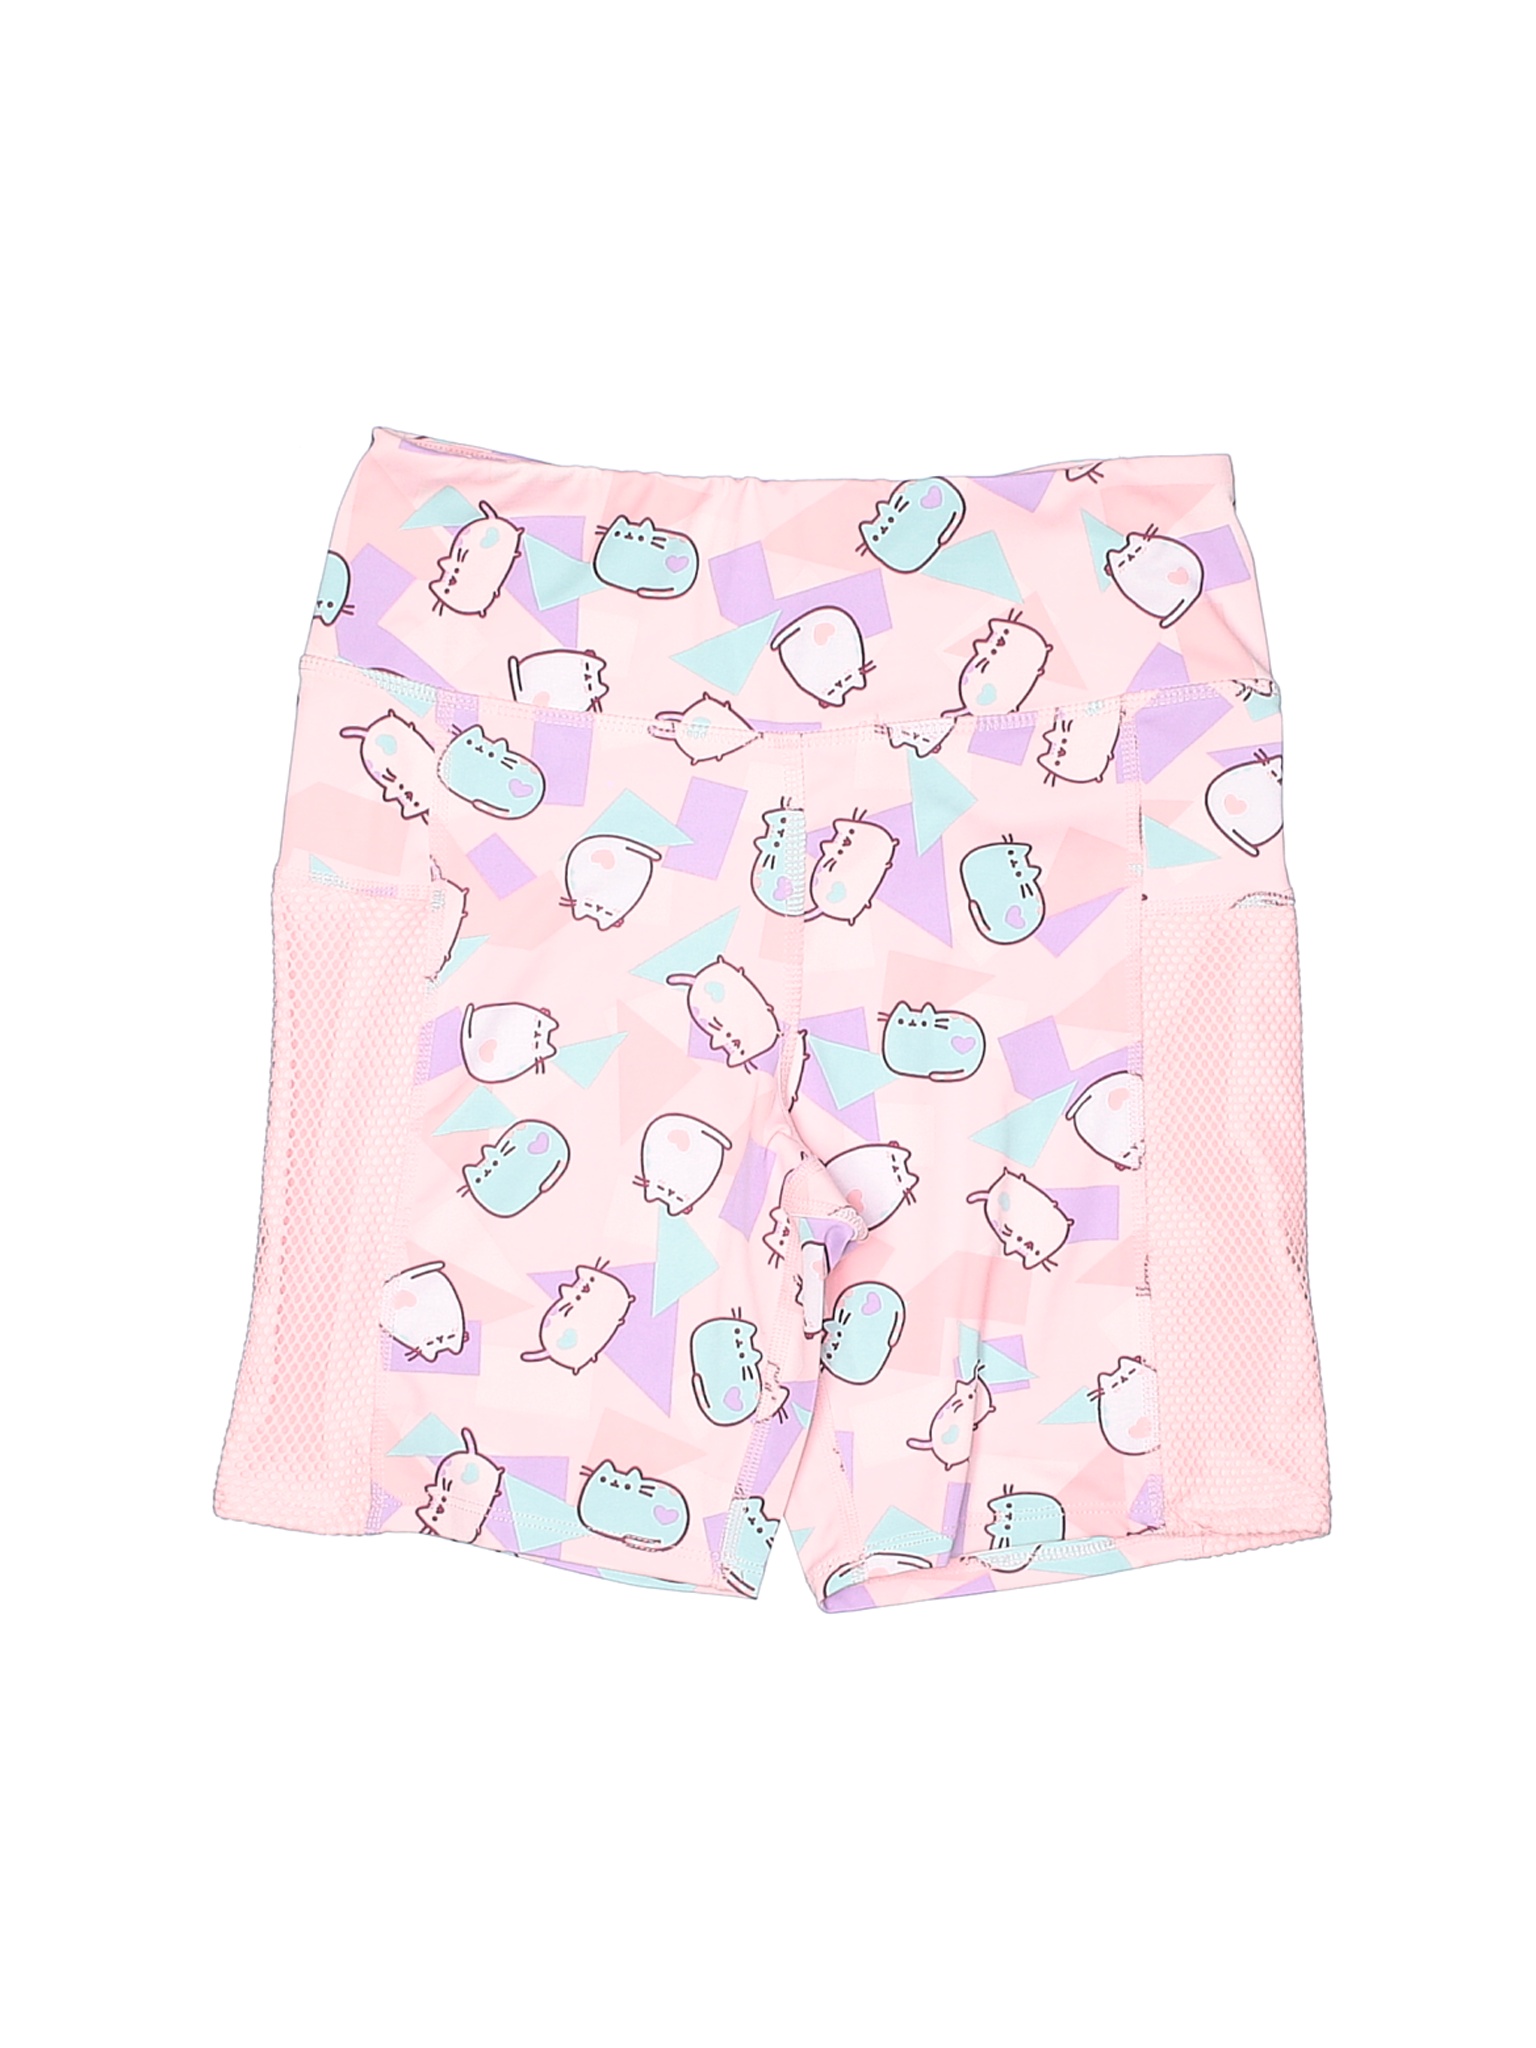 Pusheen Girls Pink Athletic Shorts S Youth | eBay